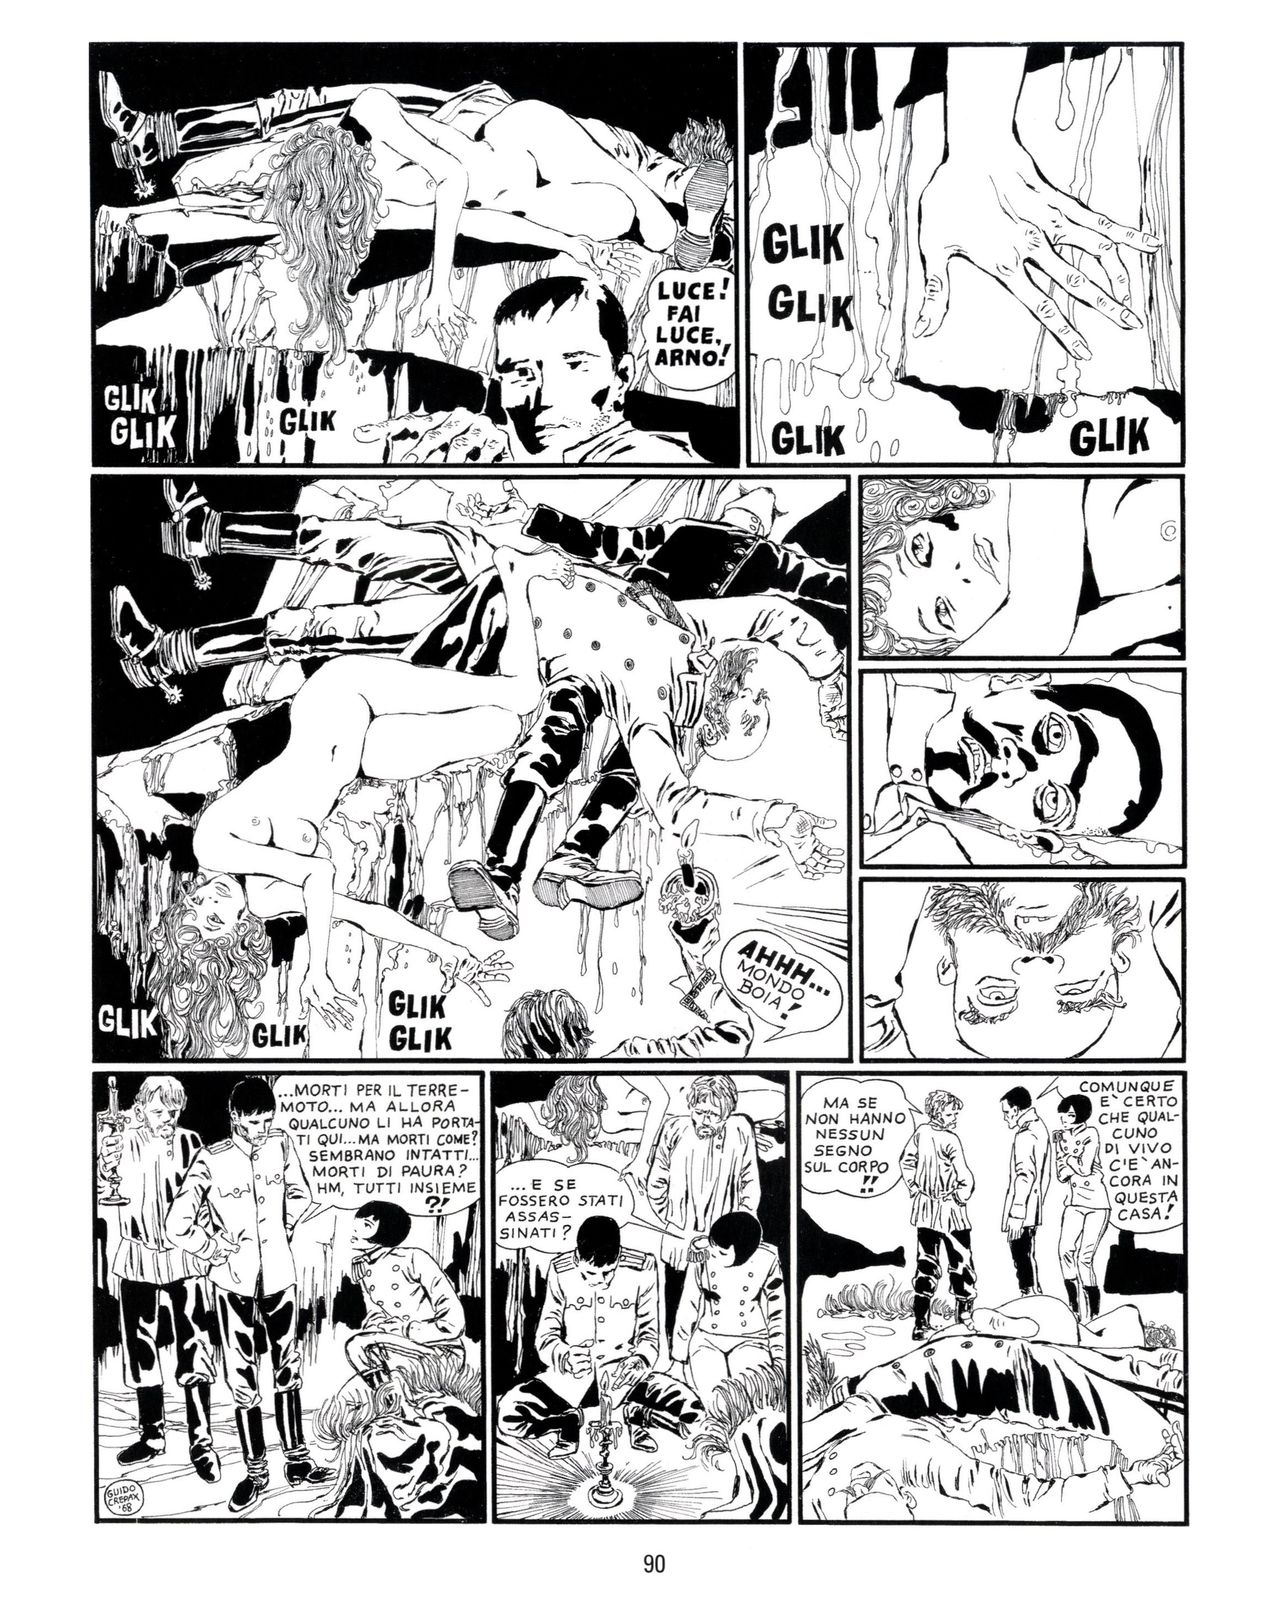 [Guido Crepax] Erotica Fumetti #25 : L'ascesa dei sotterranei : I cavalieri ciechi [Italian] 91